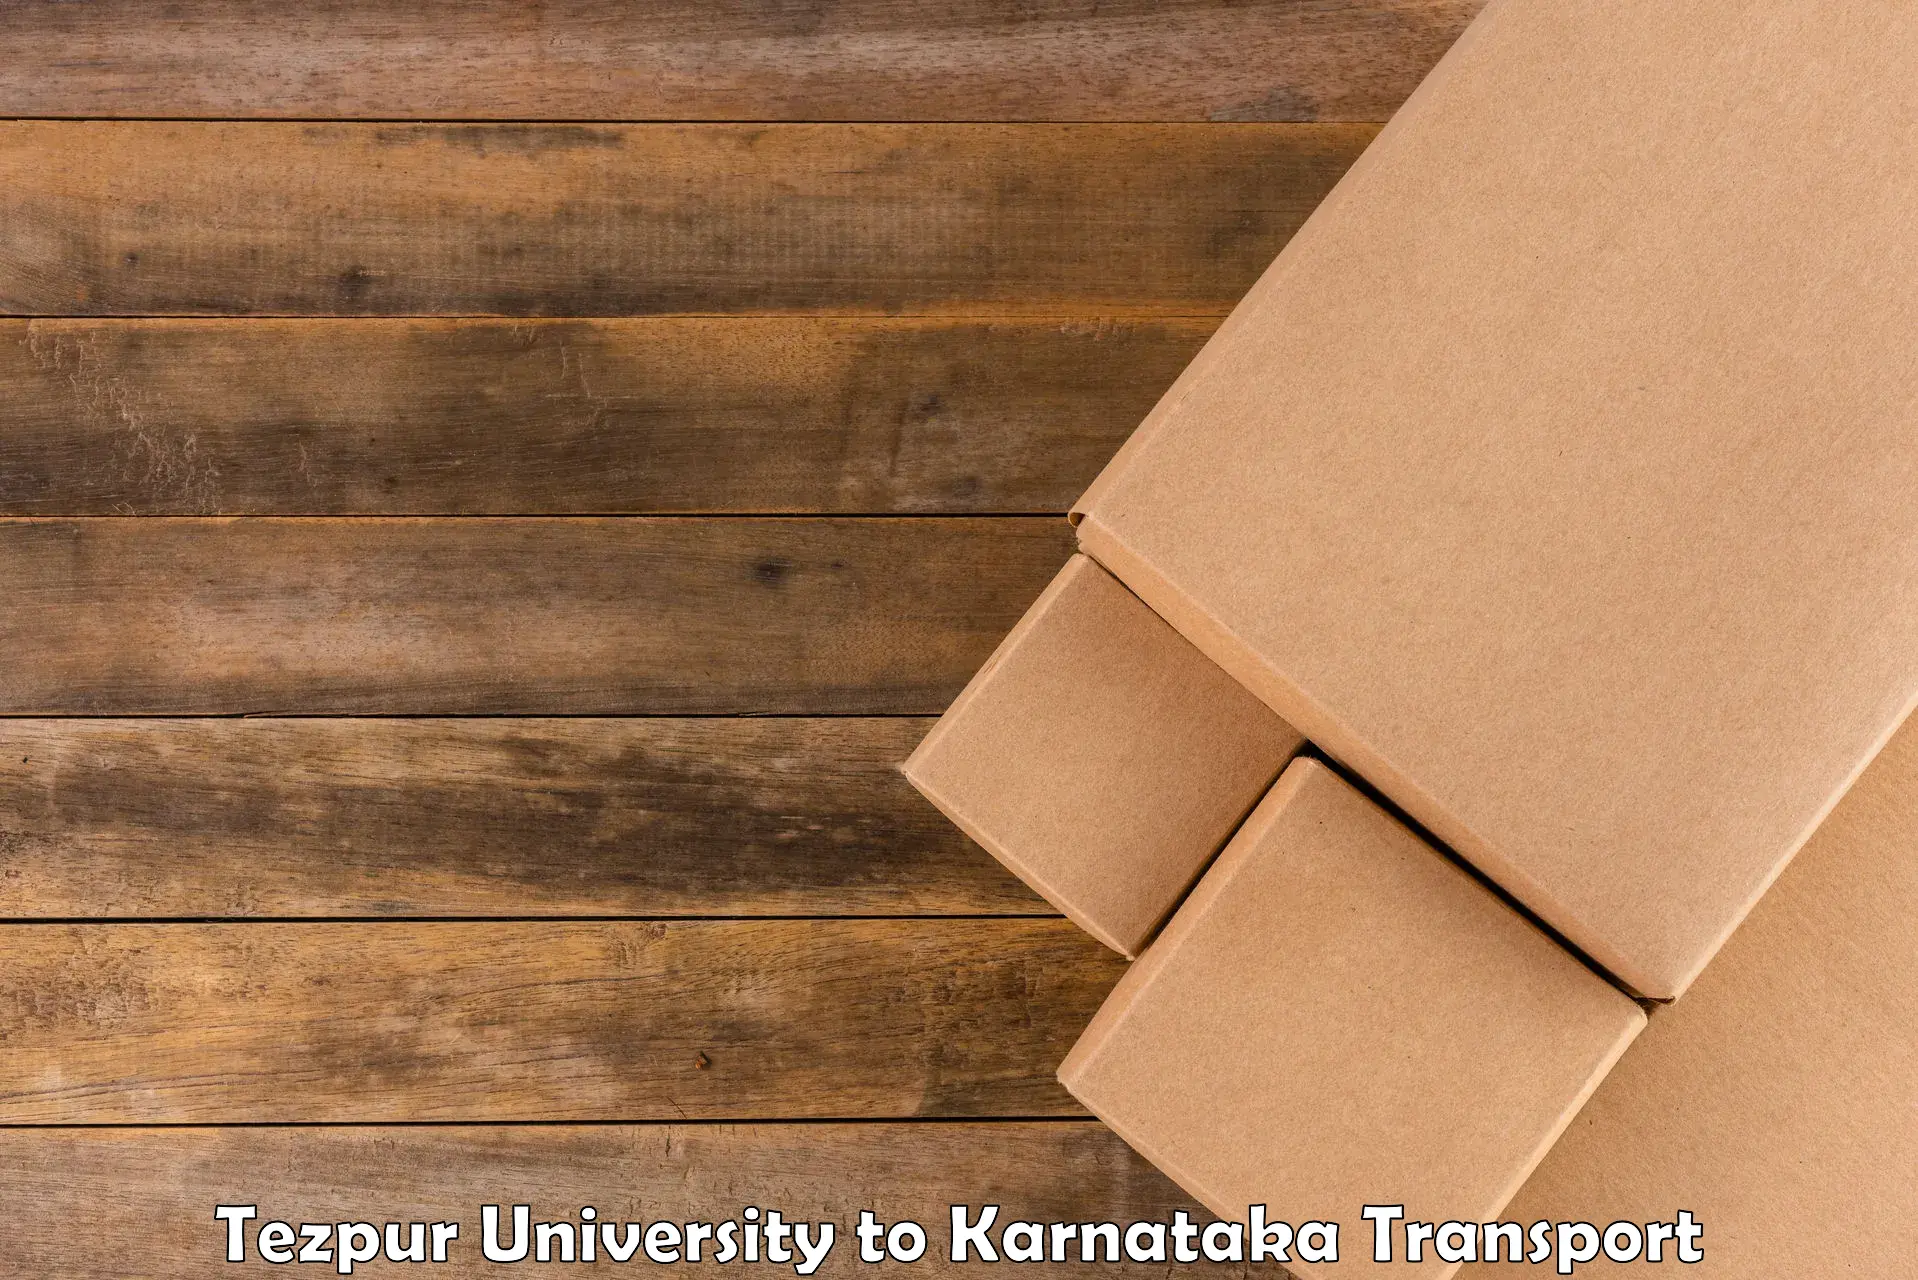 Truck transport companies in India Tezpur University to Channagiri